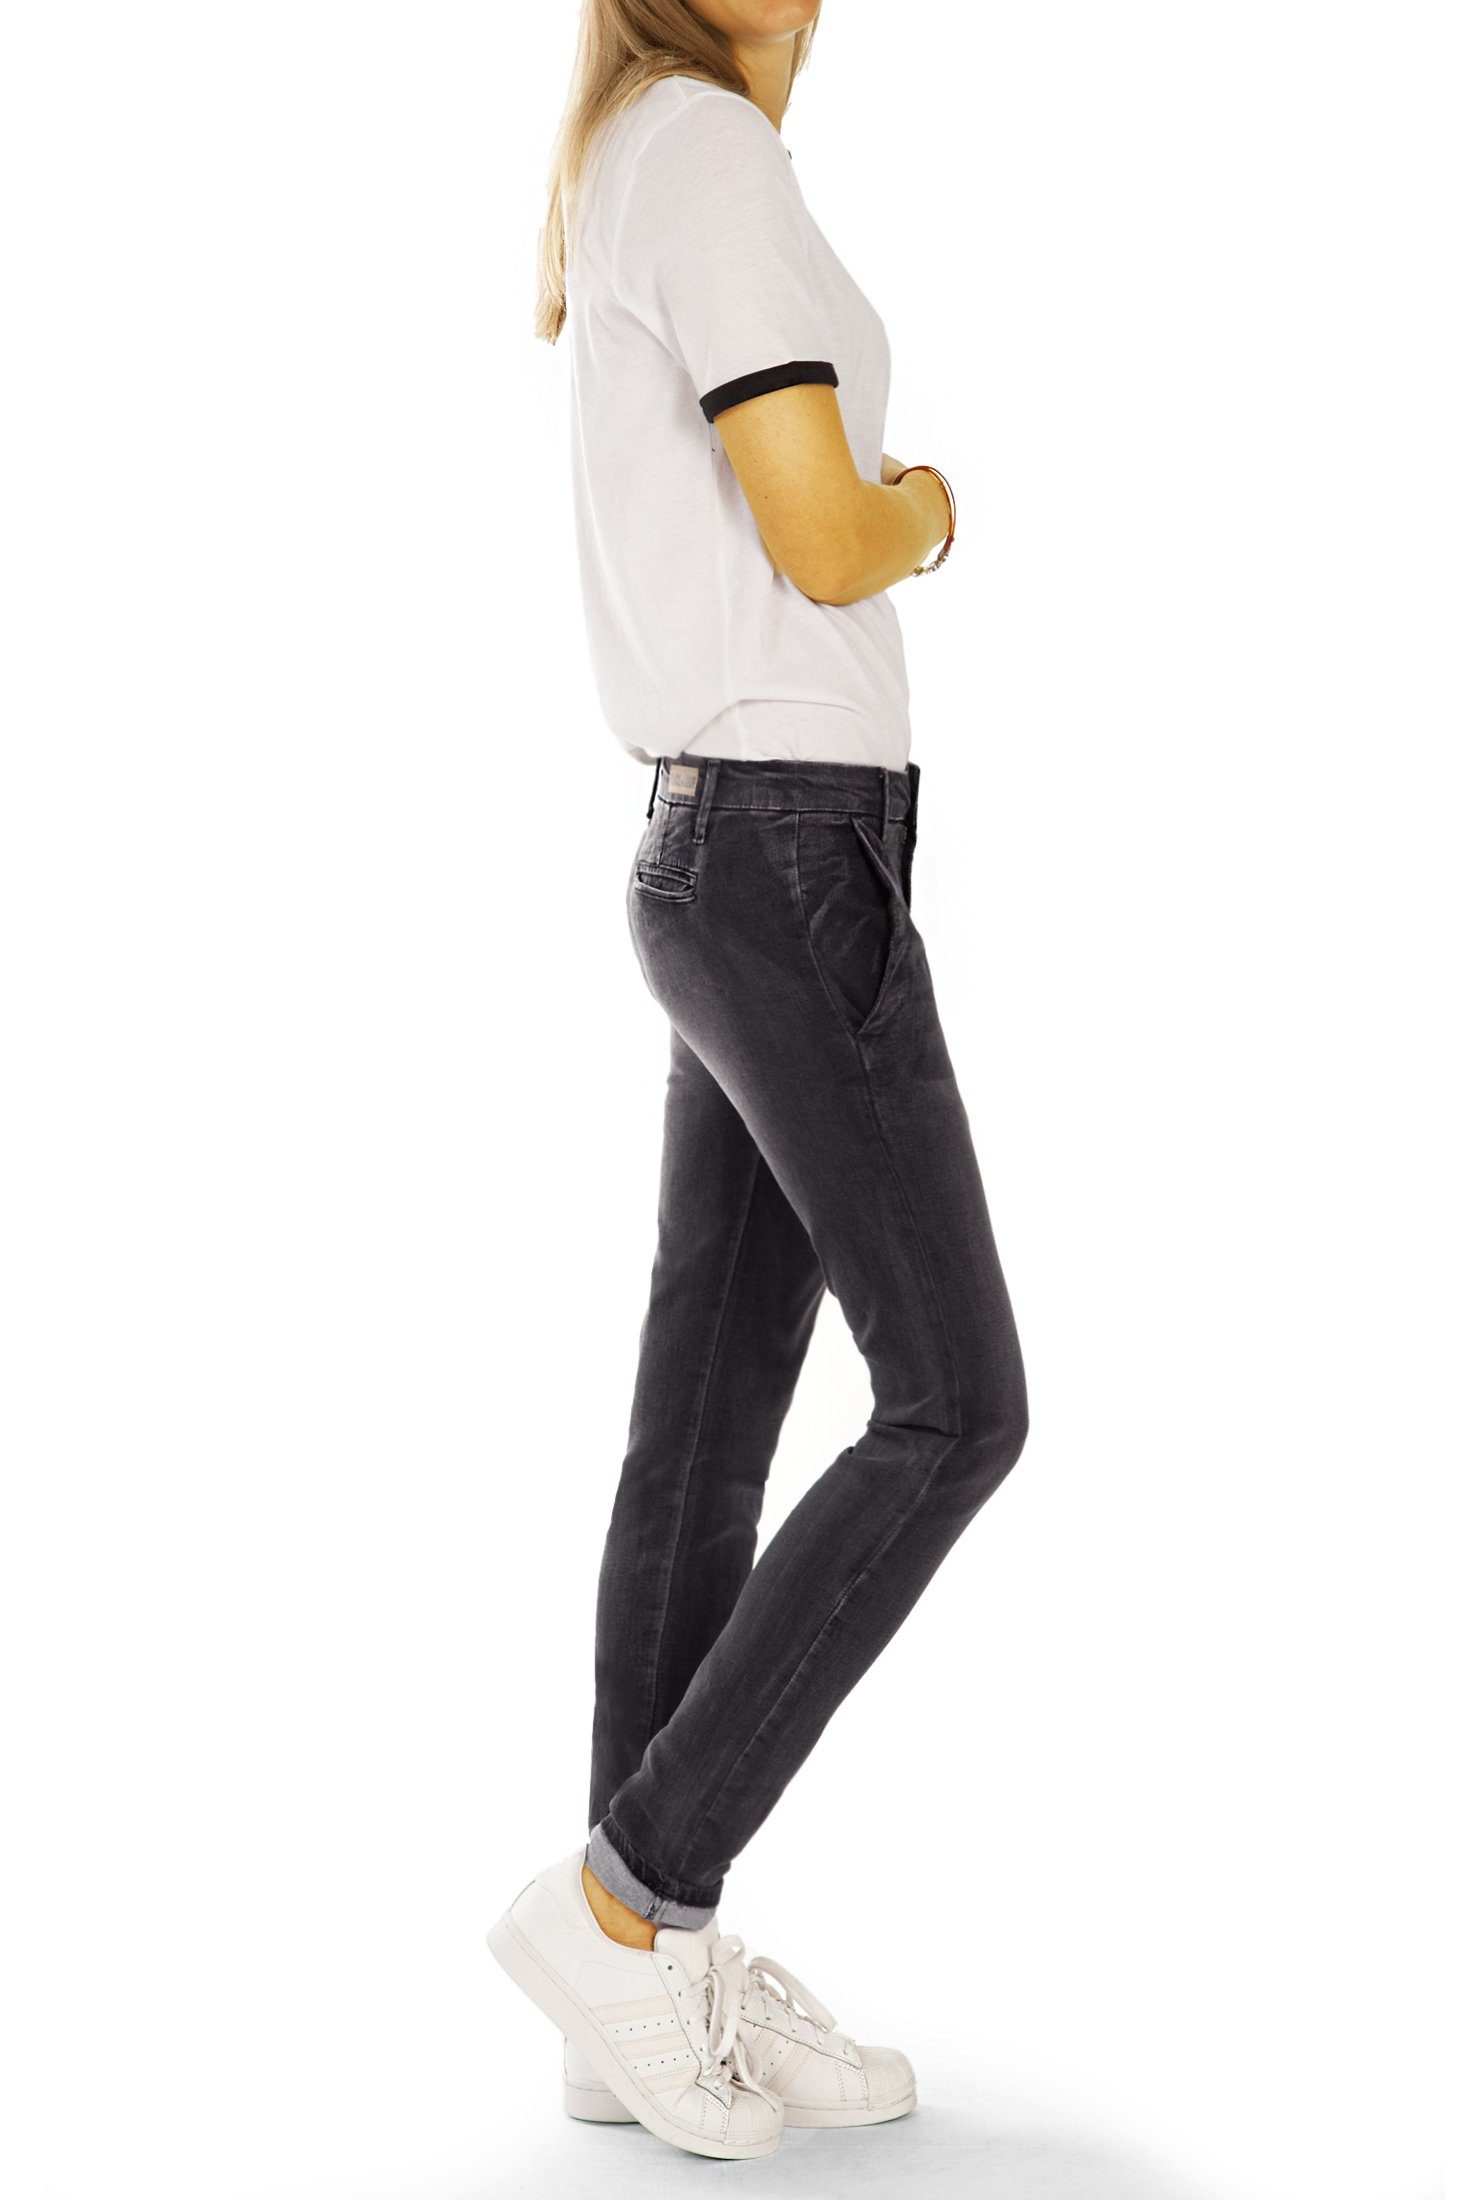 be styled Chinohose Hüftige - j10m-3 Stoffhosen Damen Chino - Hüfthosen mit grau in Hose Unifarben Stretch